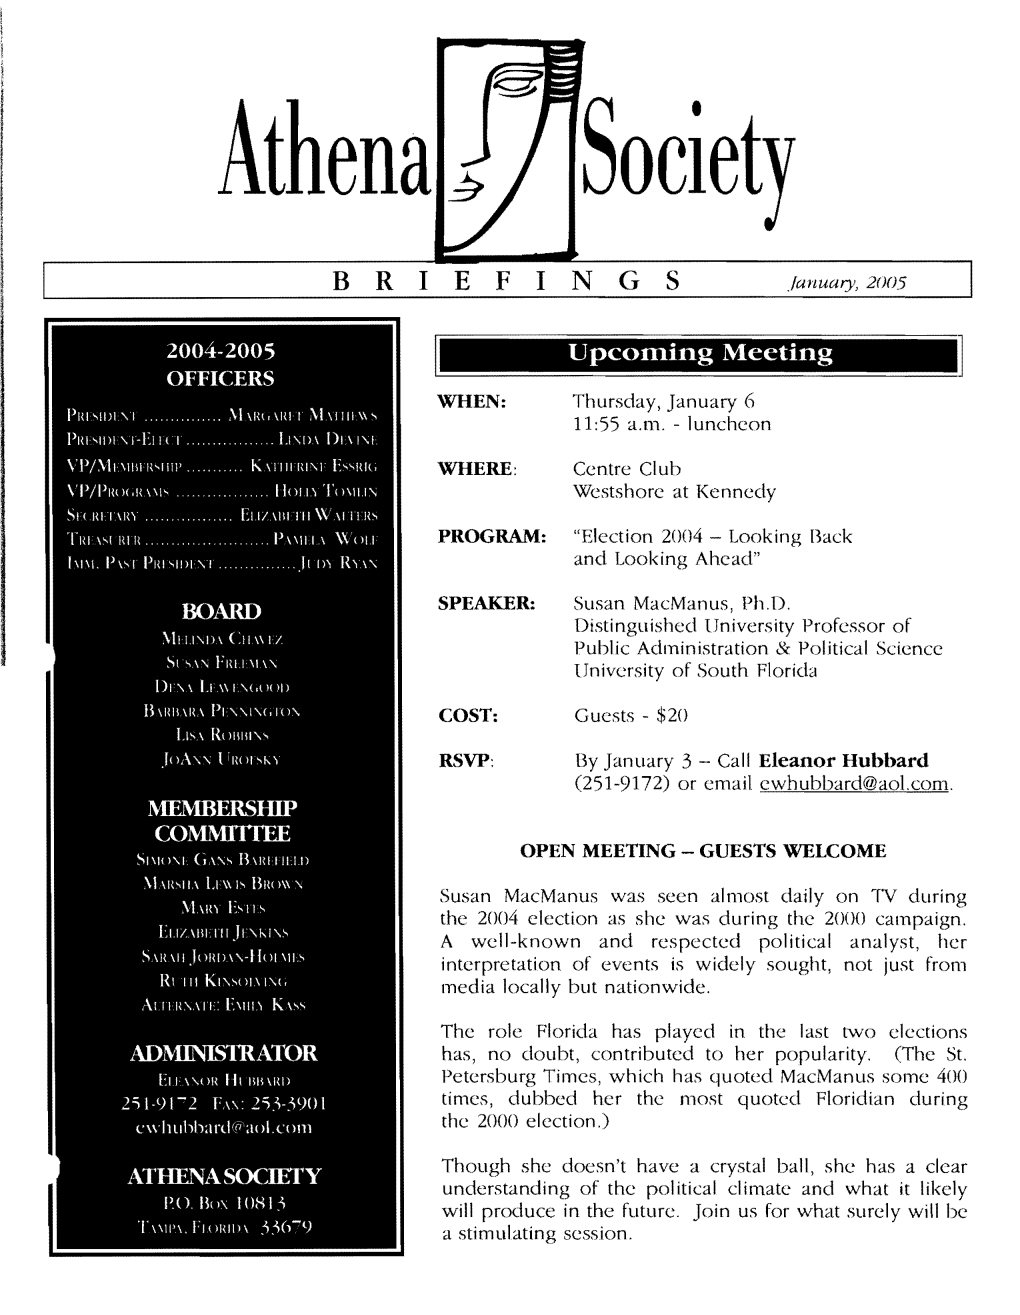 ATHENA SOCIETY Dr